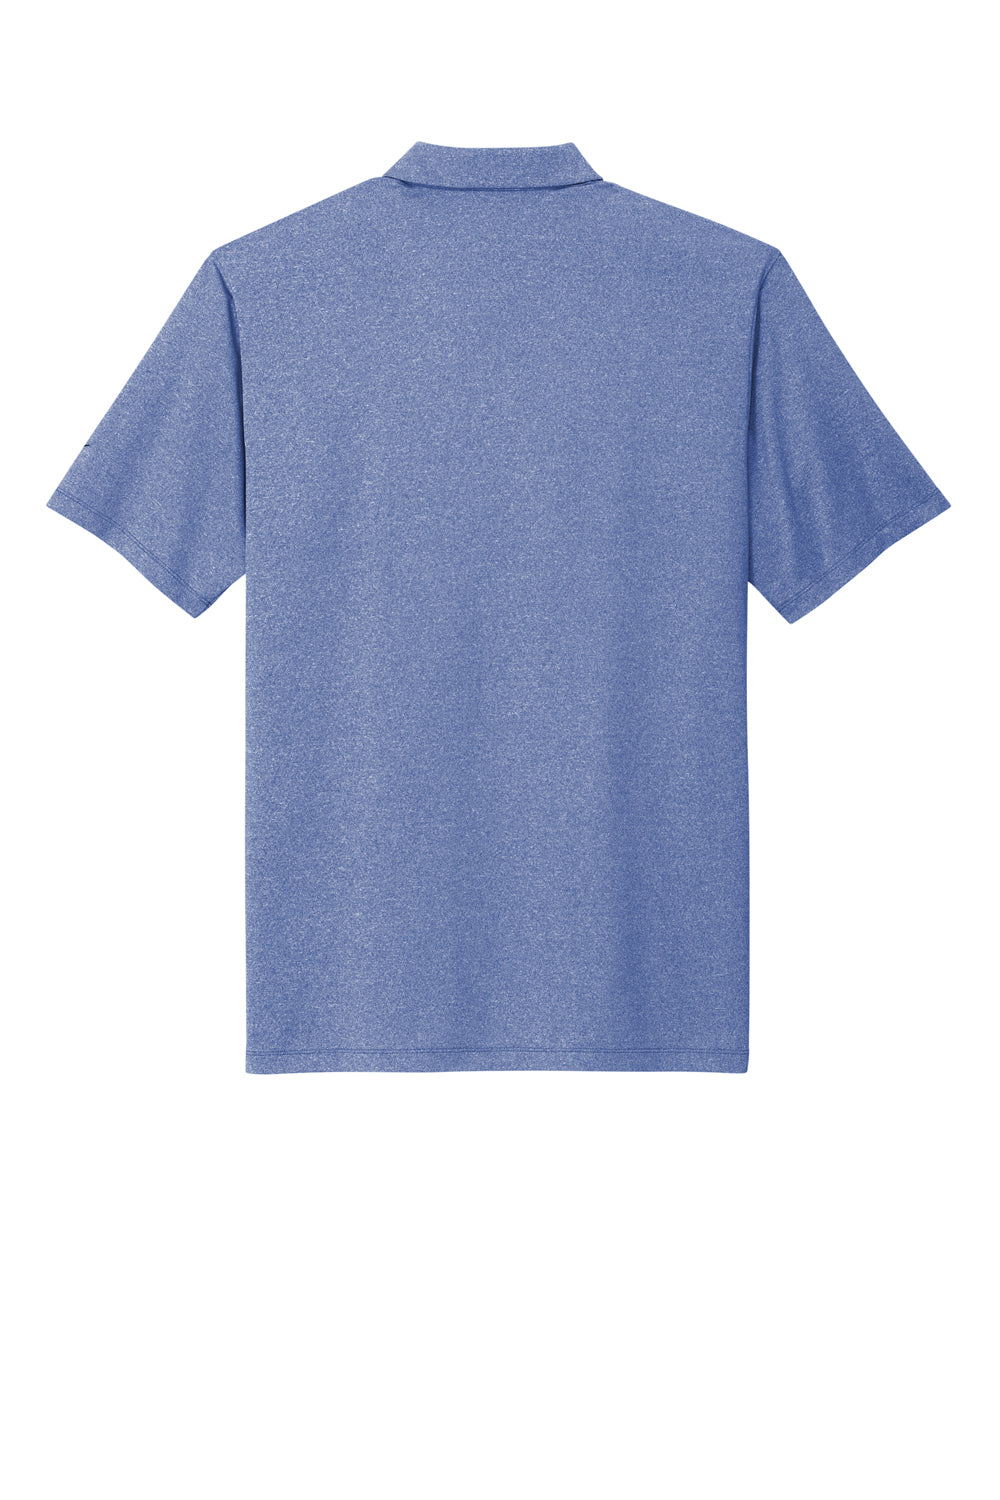 Nike NKDC2108 Mens Vapor Dri-Fit Moisture Wicking Short Sleeve Polo Shirt Heather Game Royal Blue Flat Back